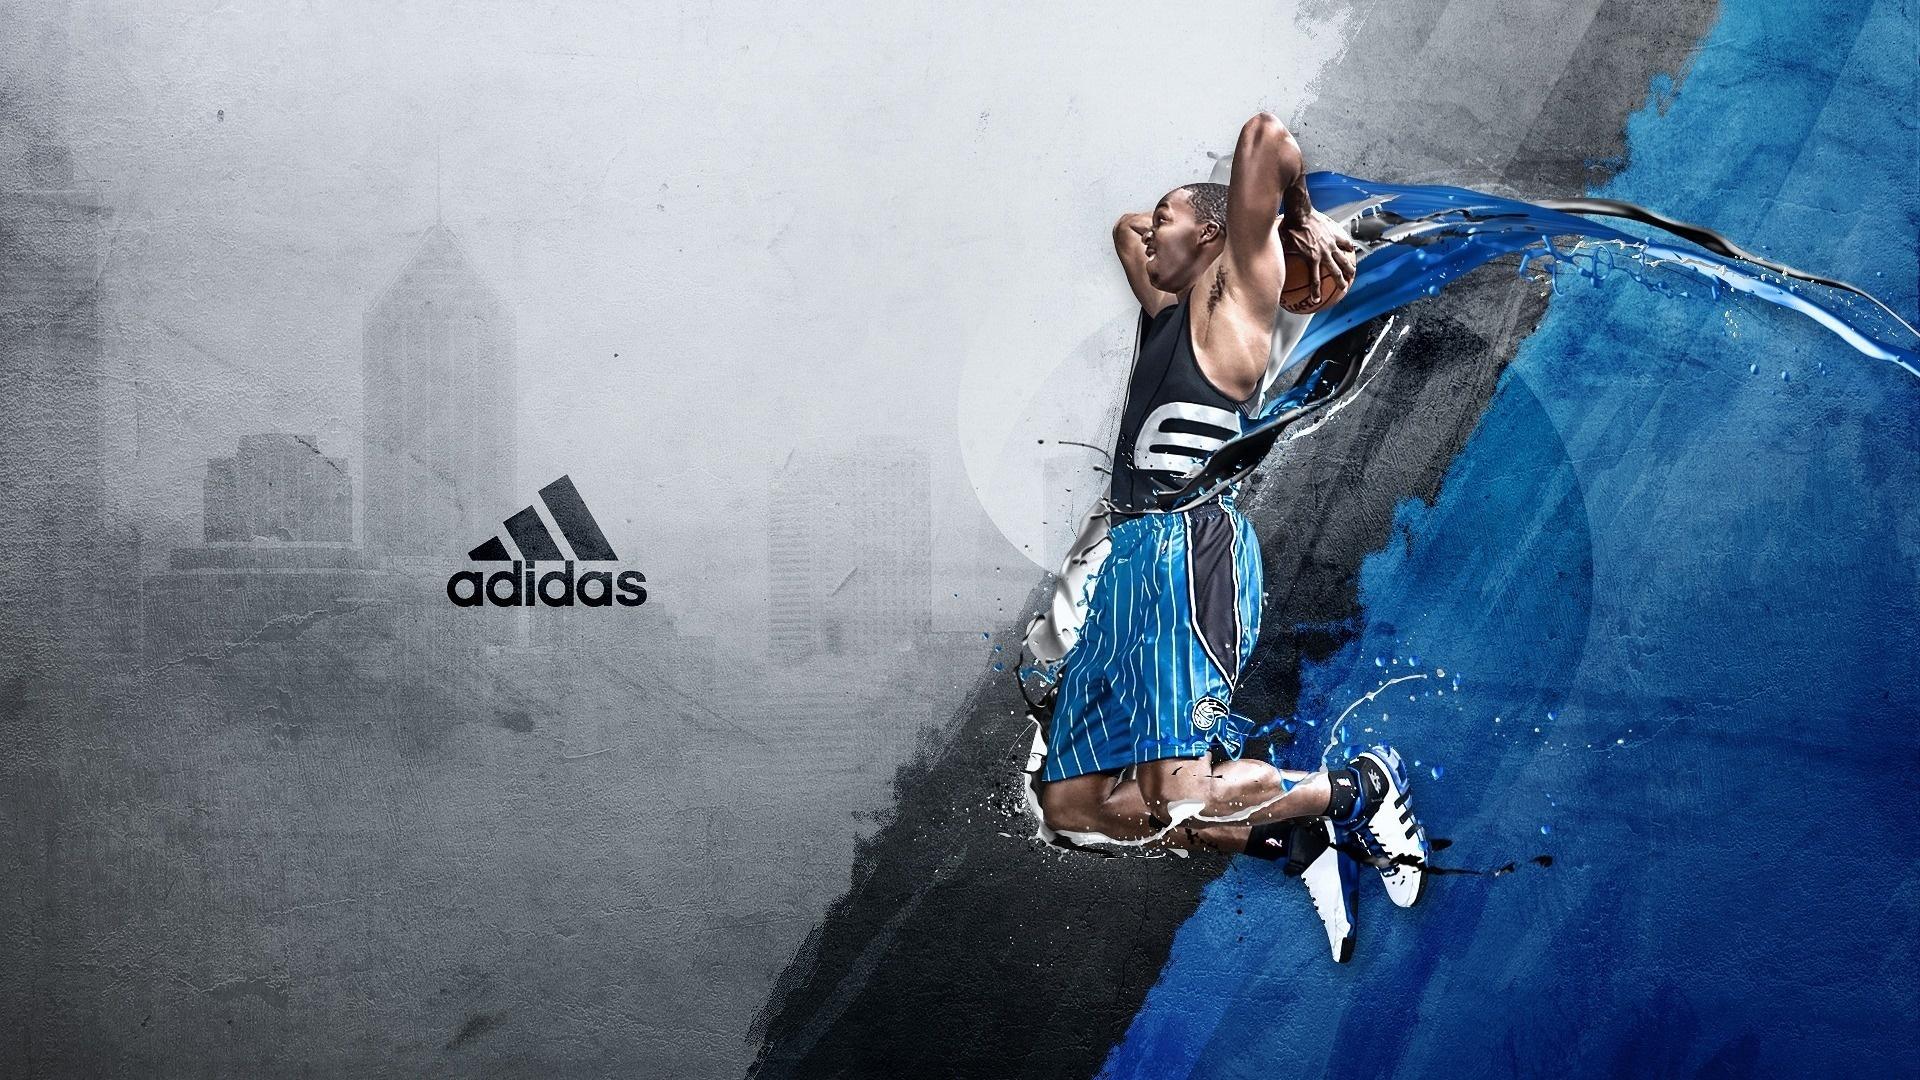 Adidas NBA Basketball Wallpaper